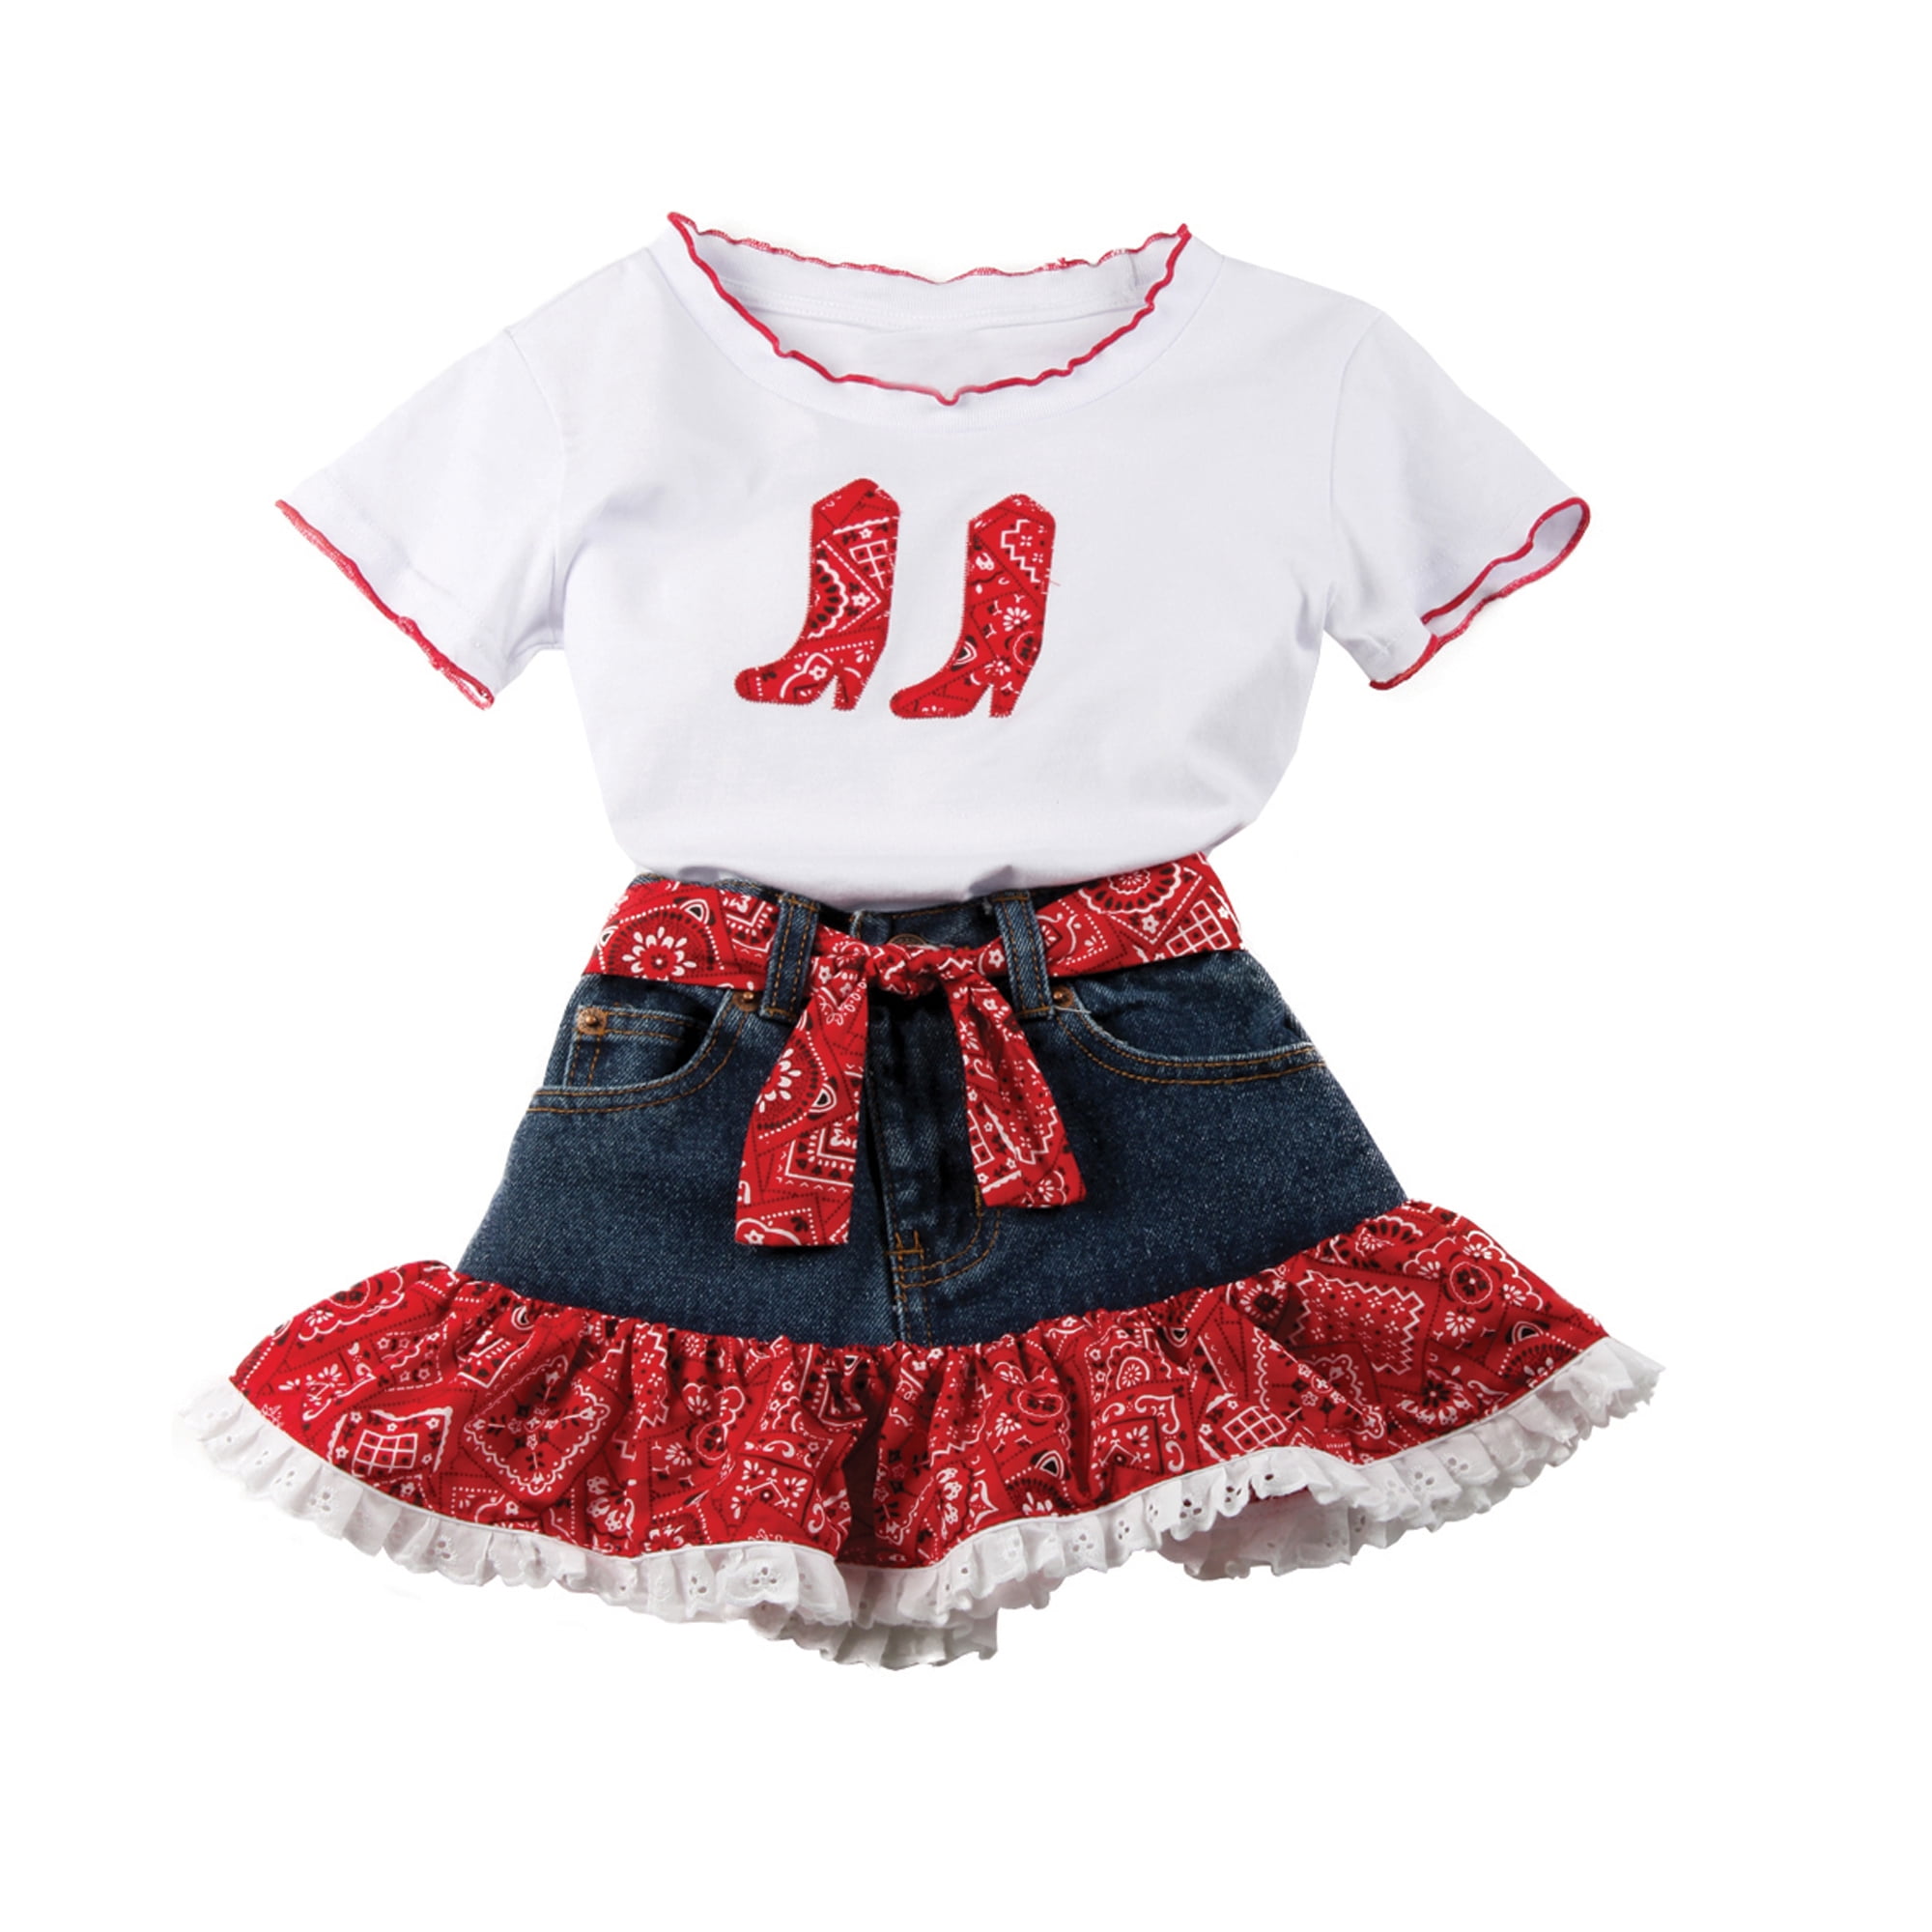 Girls' Red Bandana Skirt Set Size 5 - Walmart.com